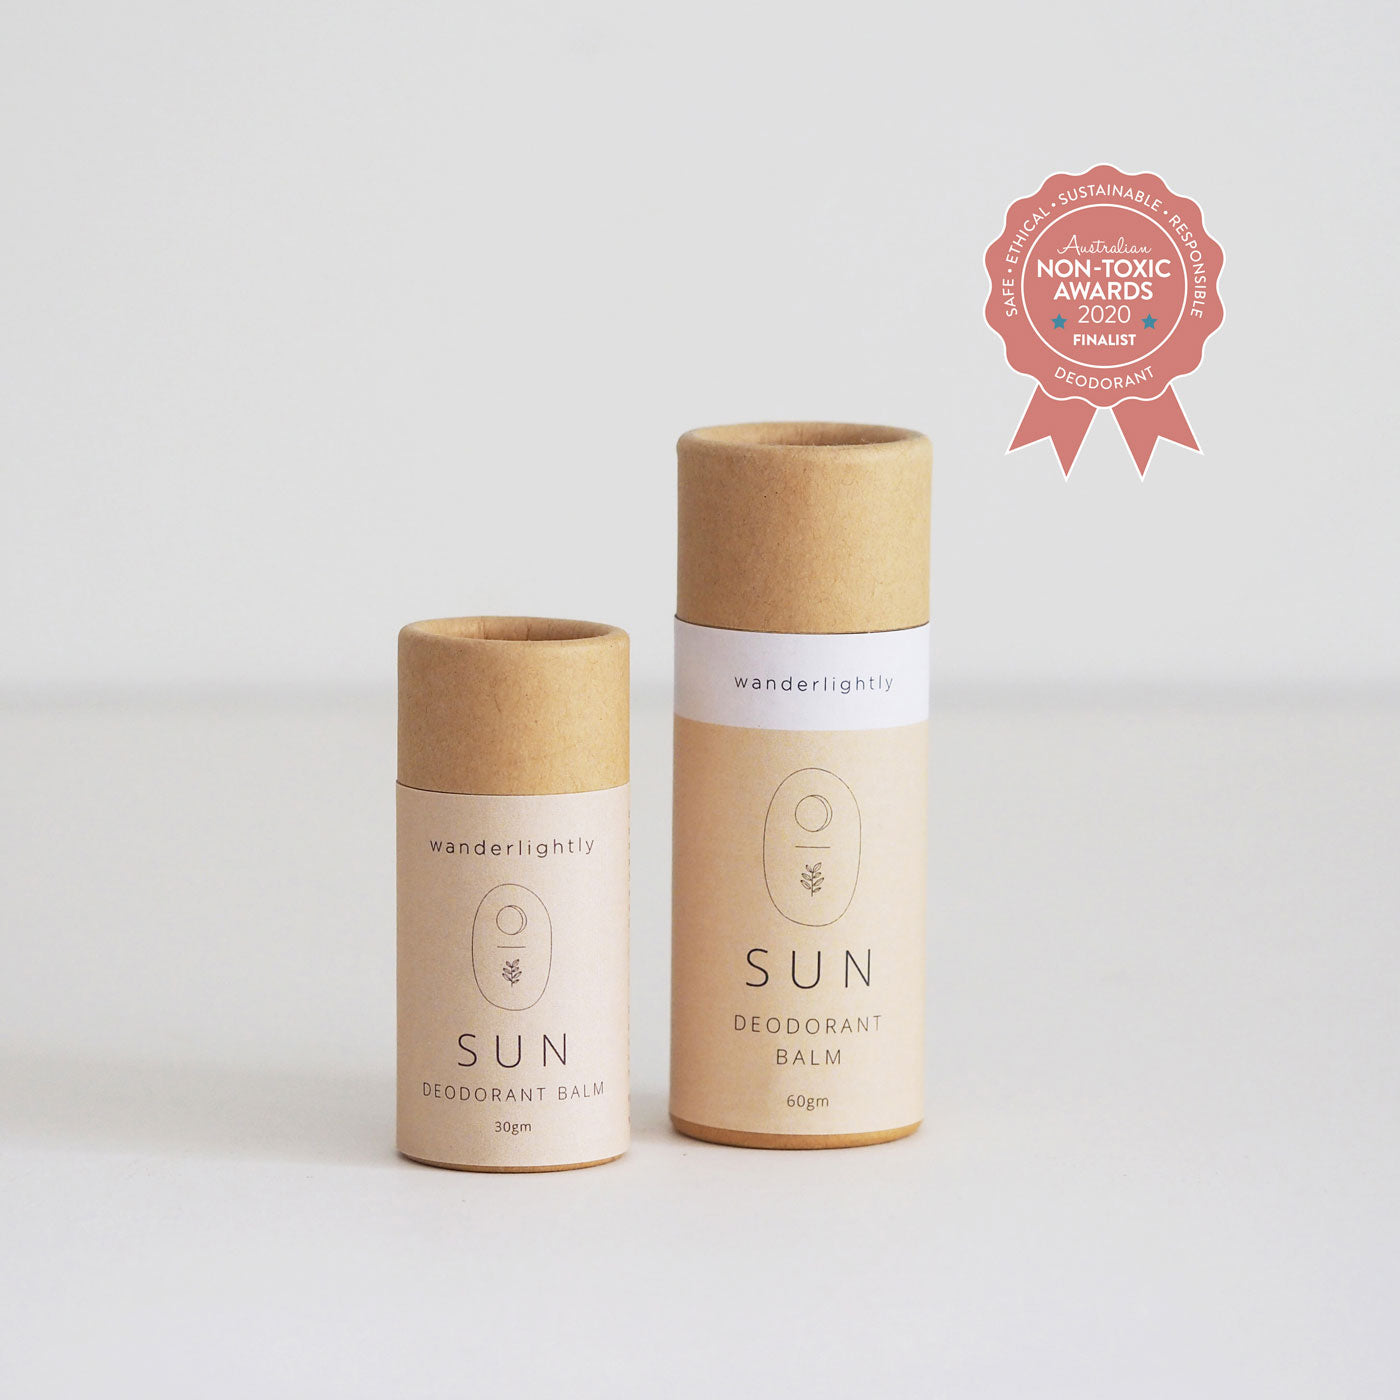 2 Cardboard recyclable tubes of Wanderlightly sun deodorant balm. Australian Non-toxic awards finalist. 